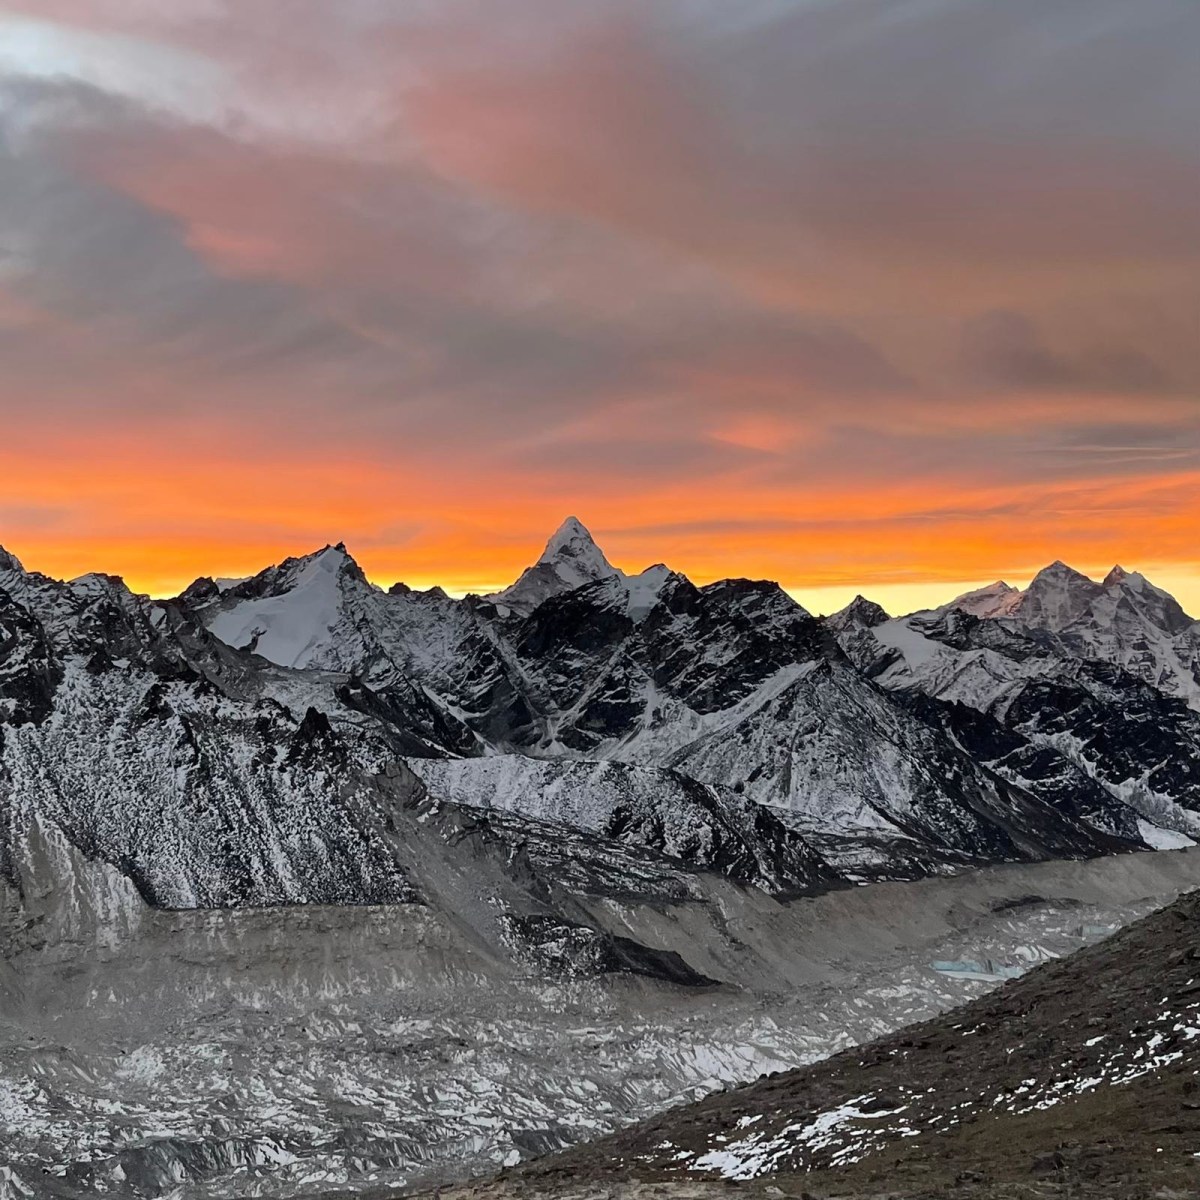 Sonnenaufgang über dem Himalaya Gebirge